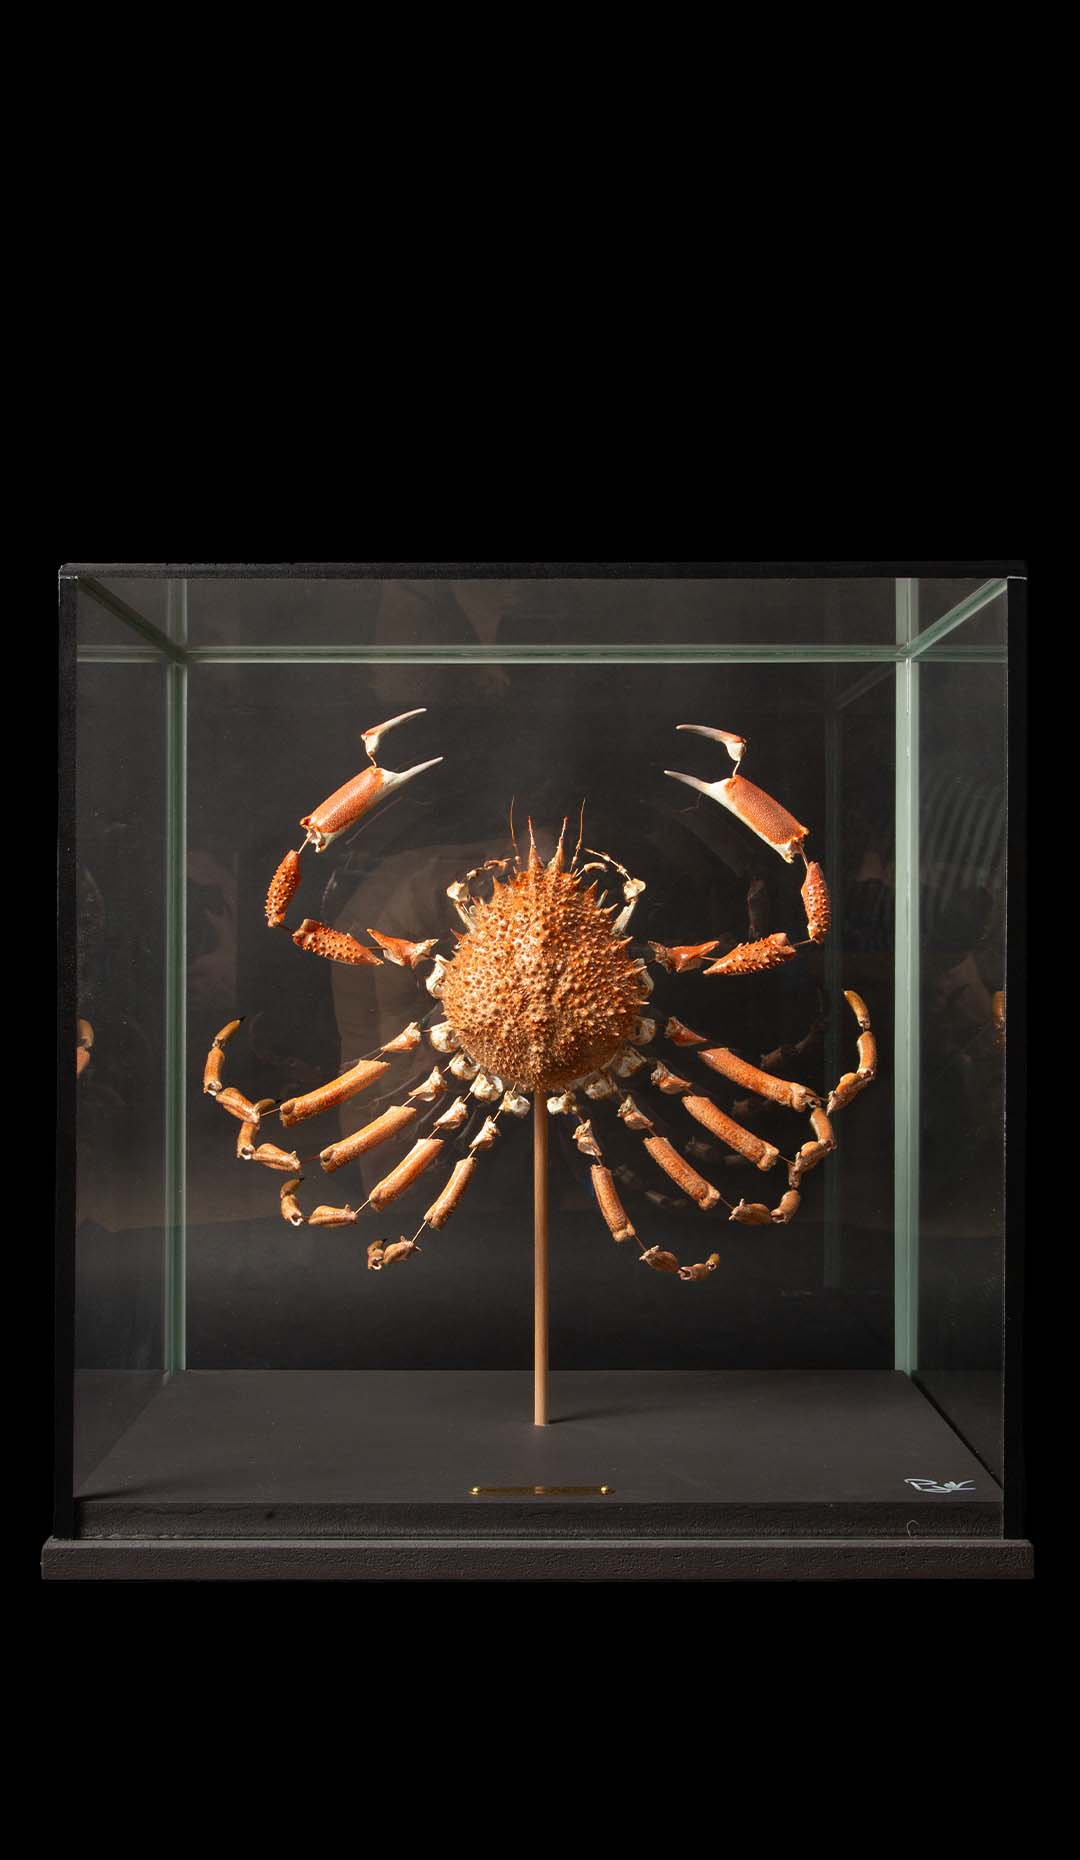 Deconstructed Spiny Spider Crab (Maja Brachydactyla) Specimen Under Glass Case